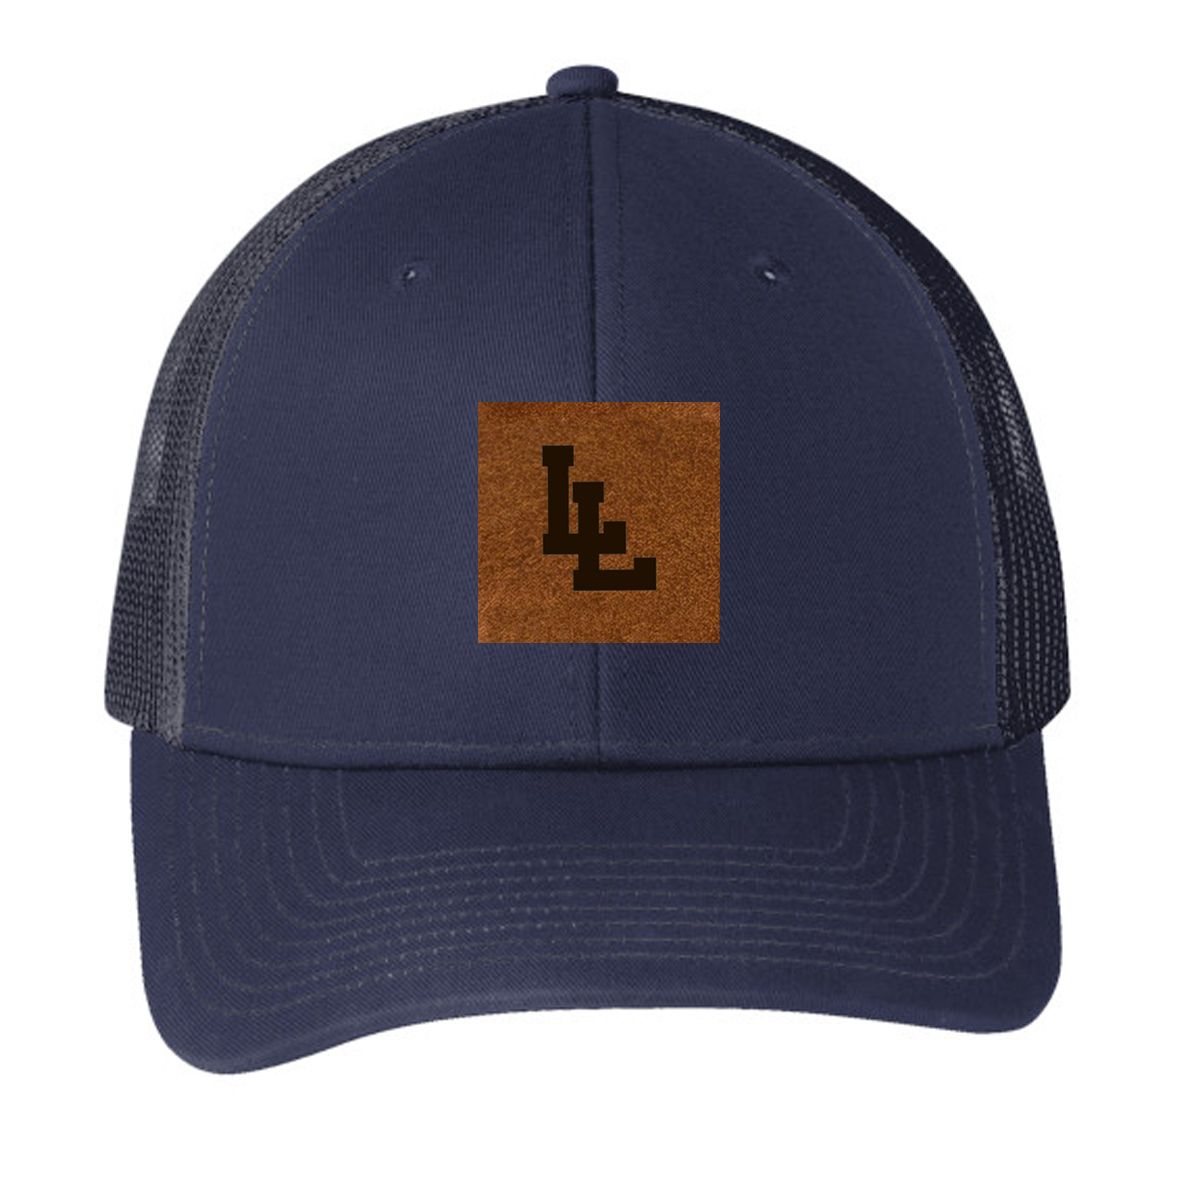 Layton High School - Trucker Cap